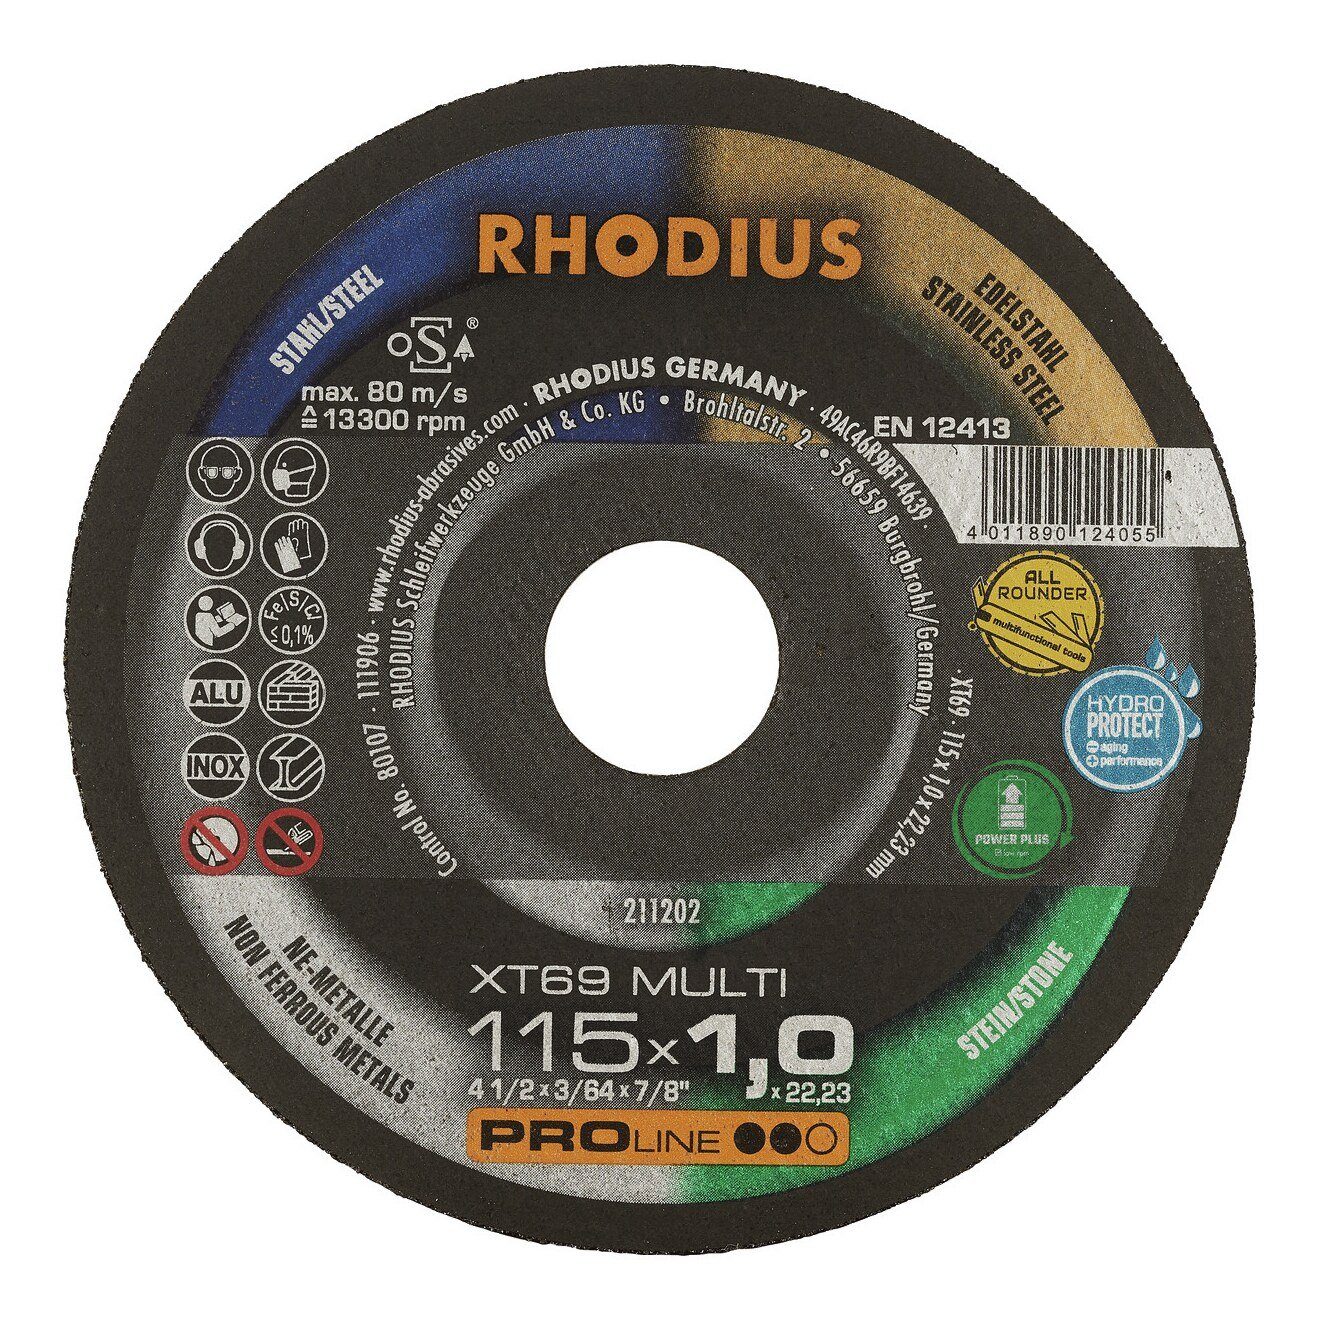 Rhodius Trennscheibe, 115 115 mm, 1 Ø x XT69MULTIPRO mm gerade